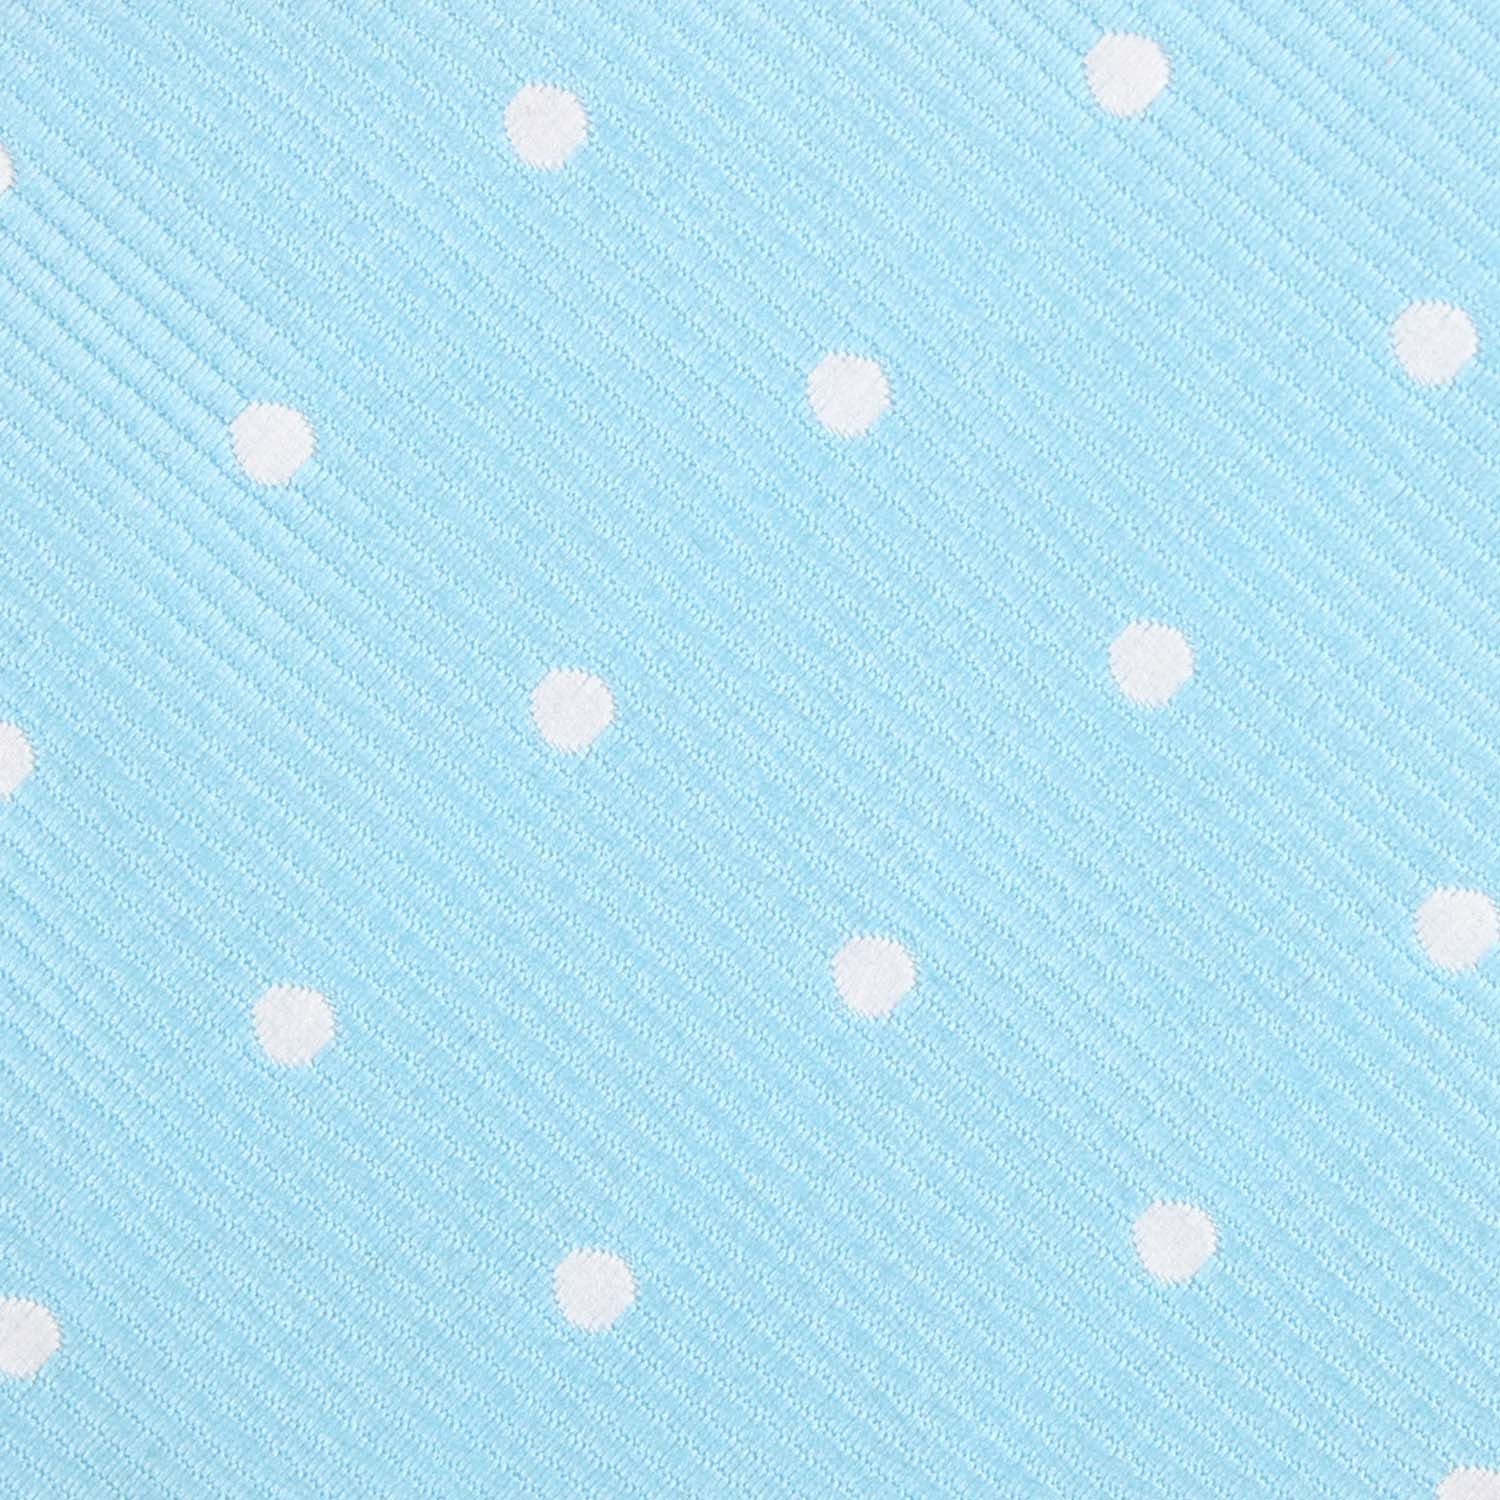 Sky Blue with White Polka Dots Fabric Self Tie Bow Tie M141Sky Blue with White Polka Dots Fabric Self Tie Bow Tie M141